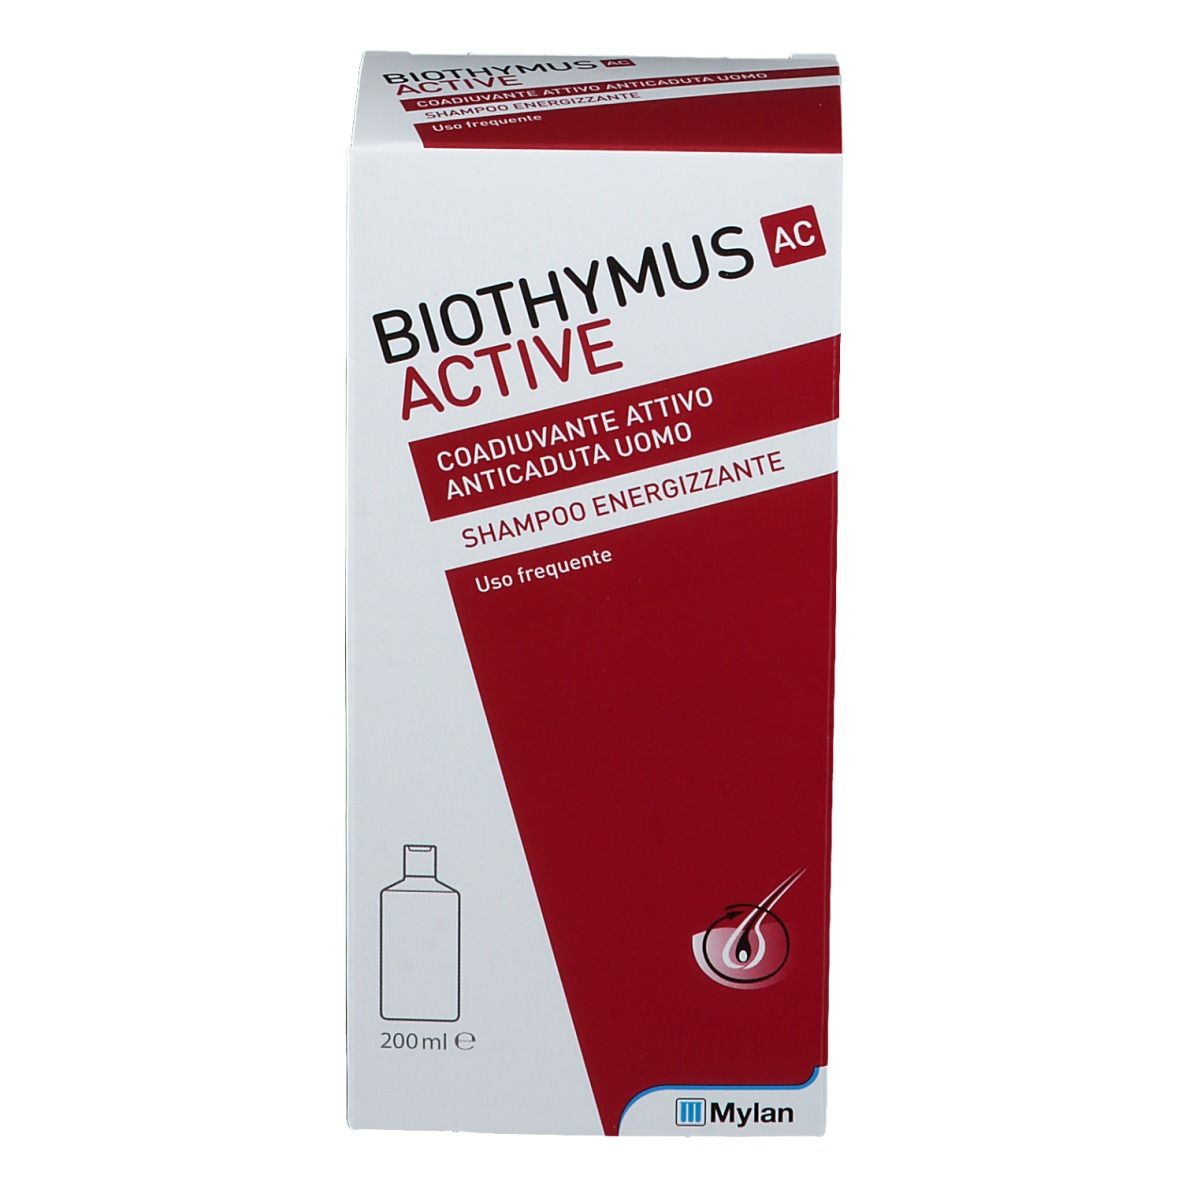 BIOTHYMUS AC Active Shampoo Energizzante